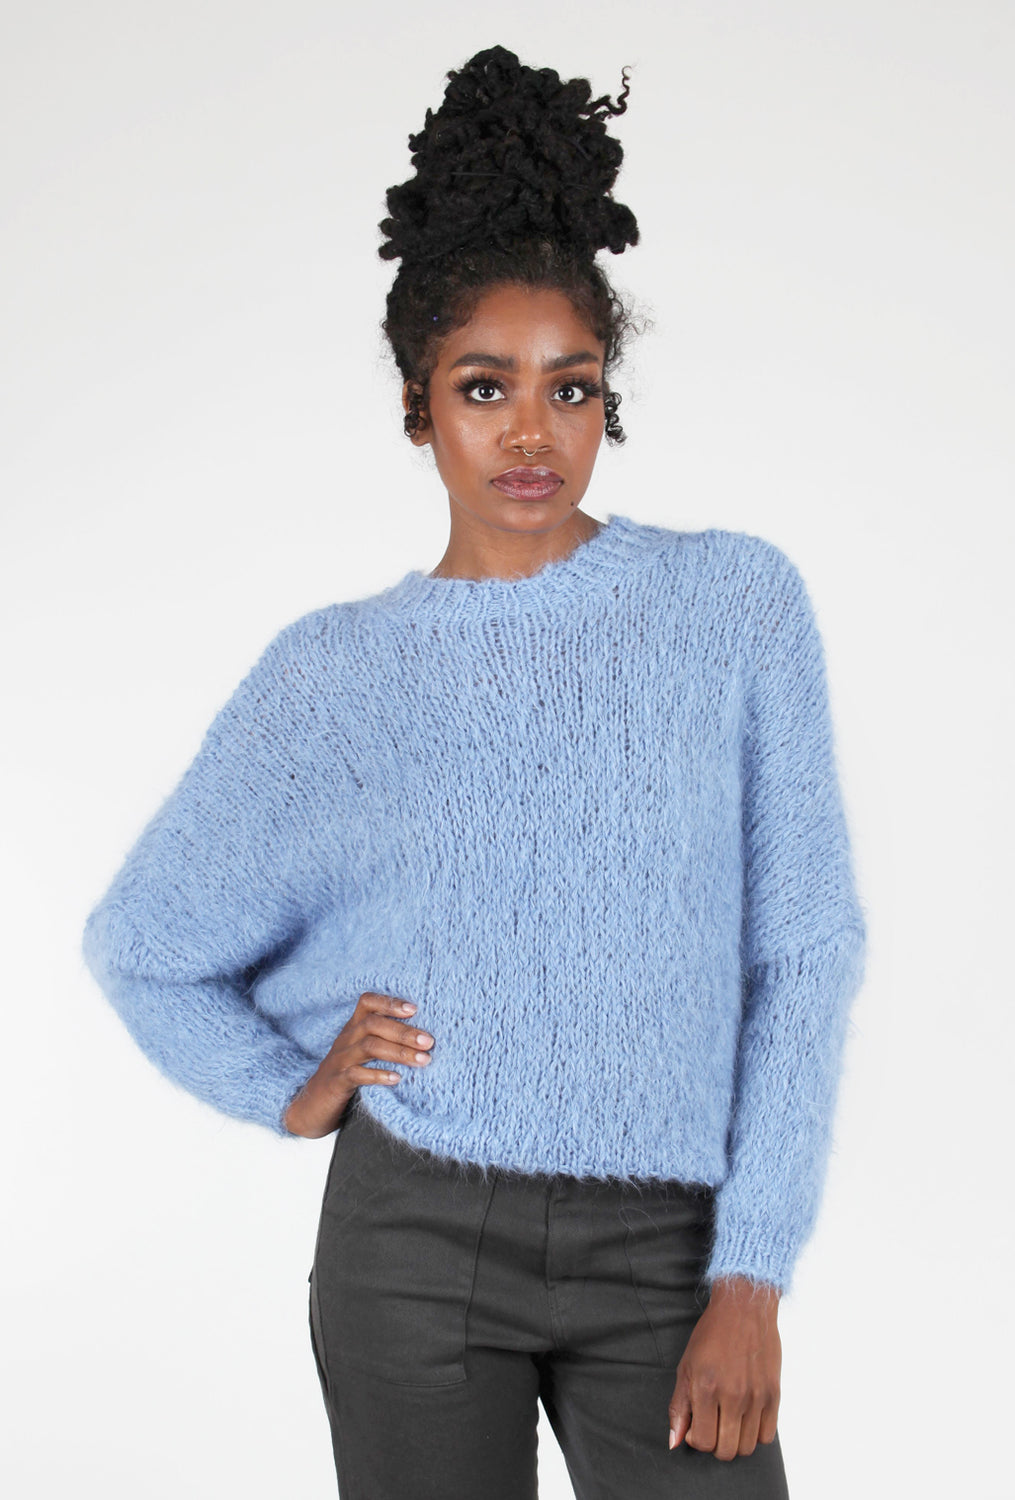 Amano by Lorena Laing Hand-Knit Tie-Back Alpaca Sweater, Sky Blue 